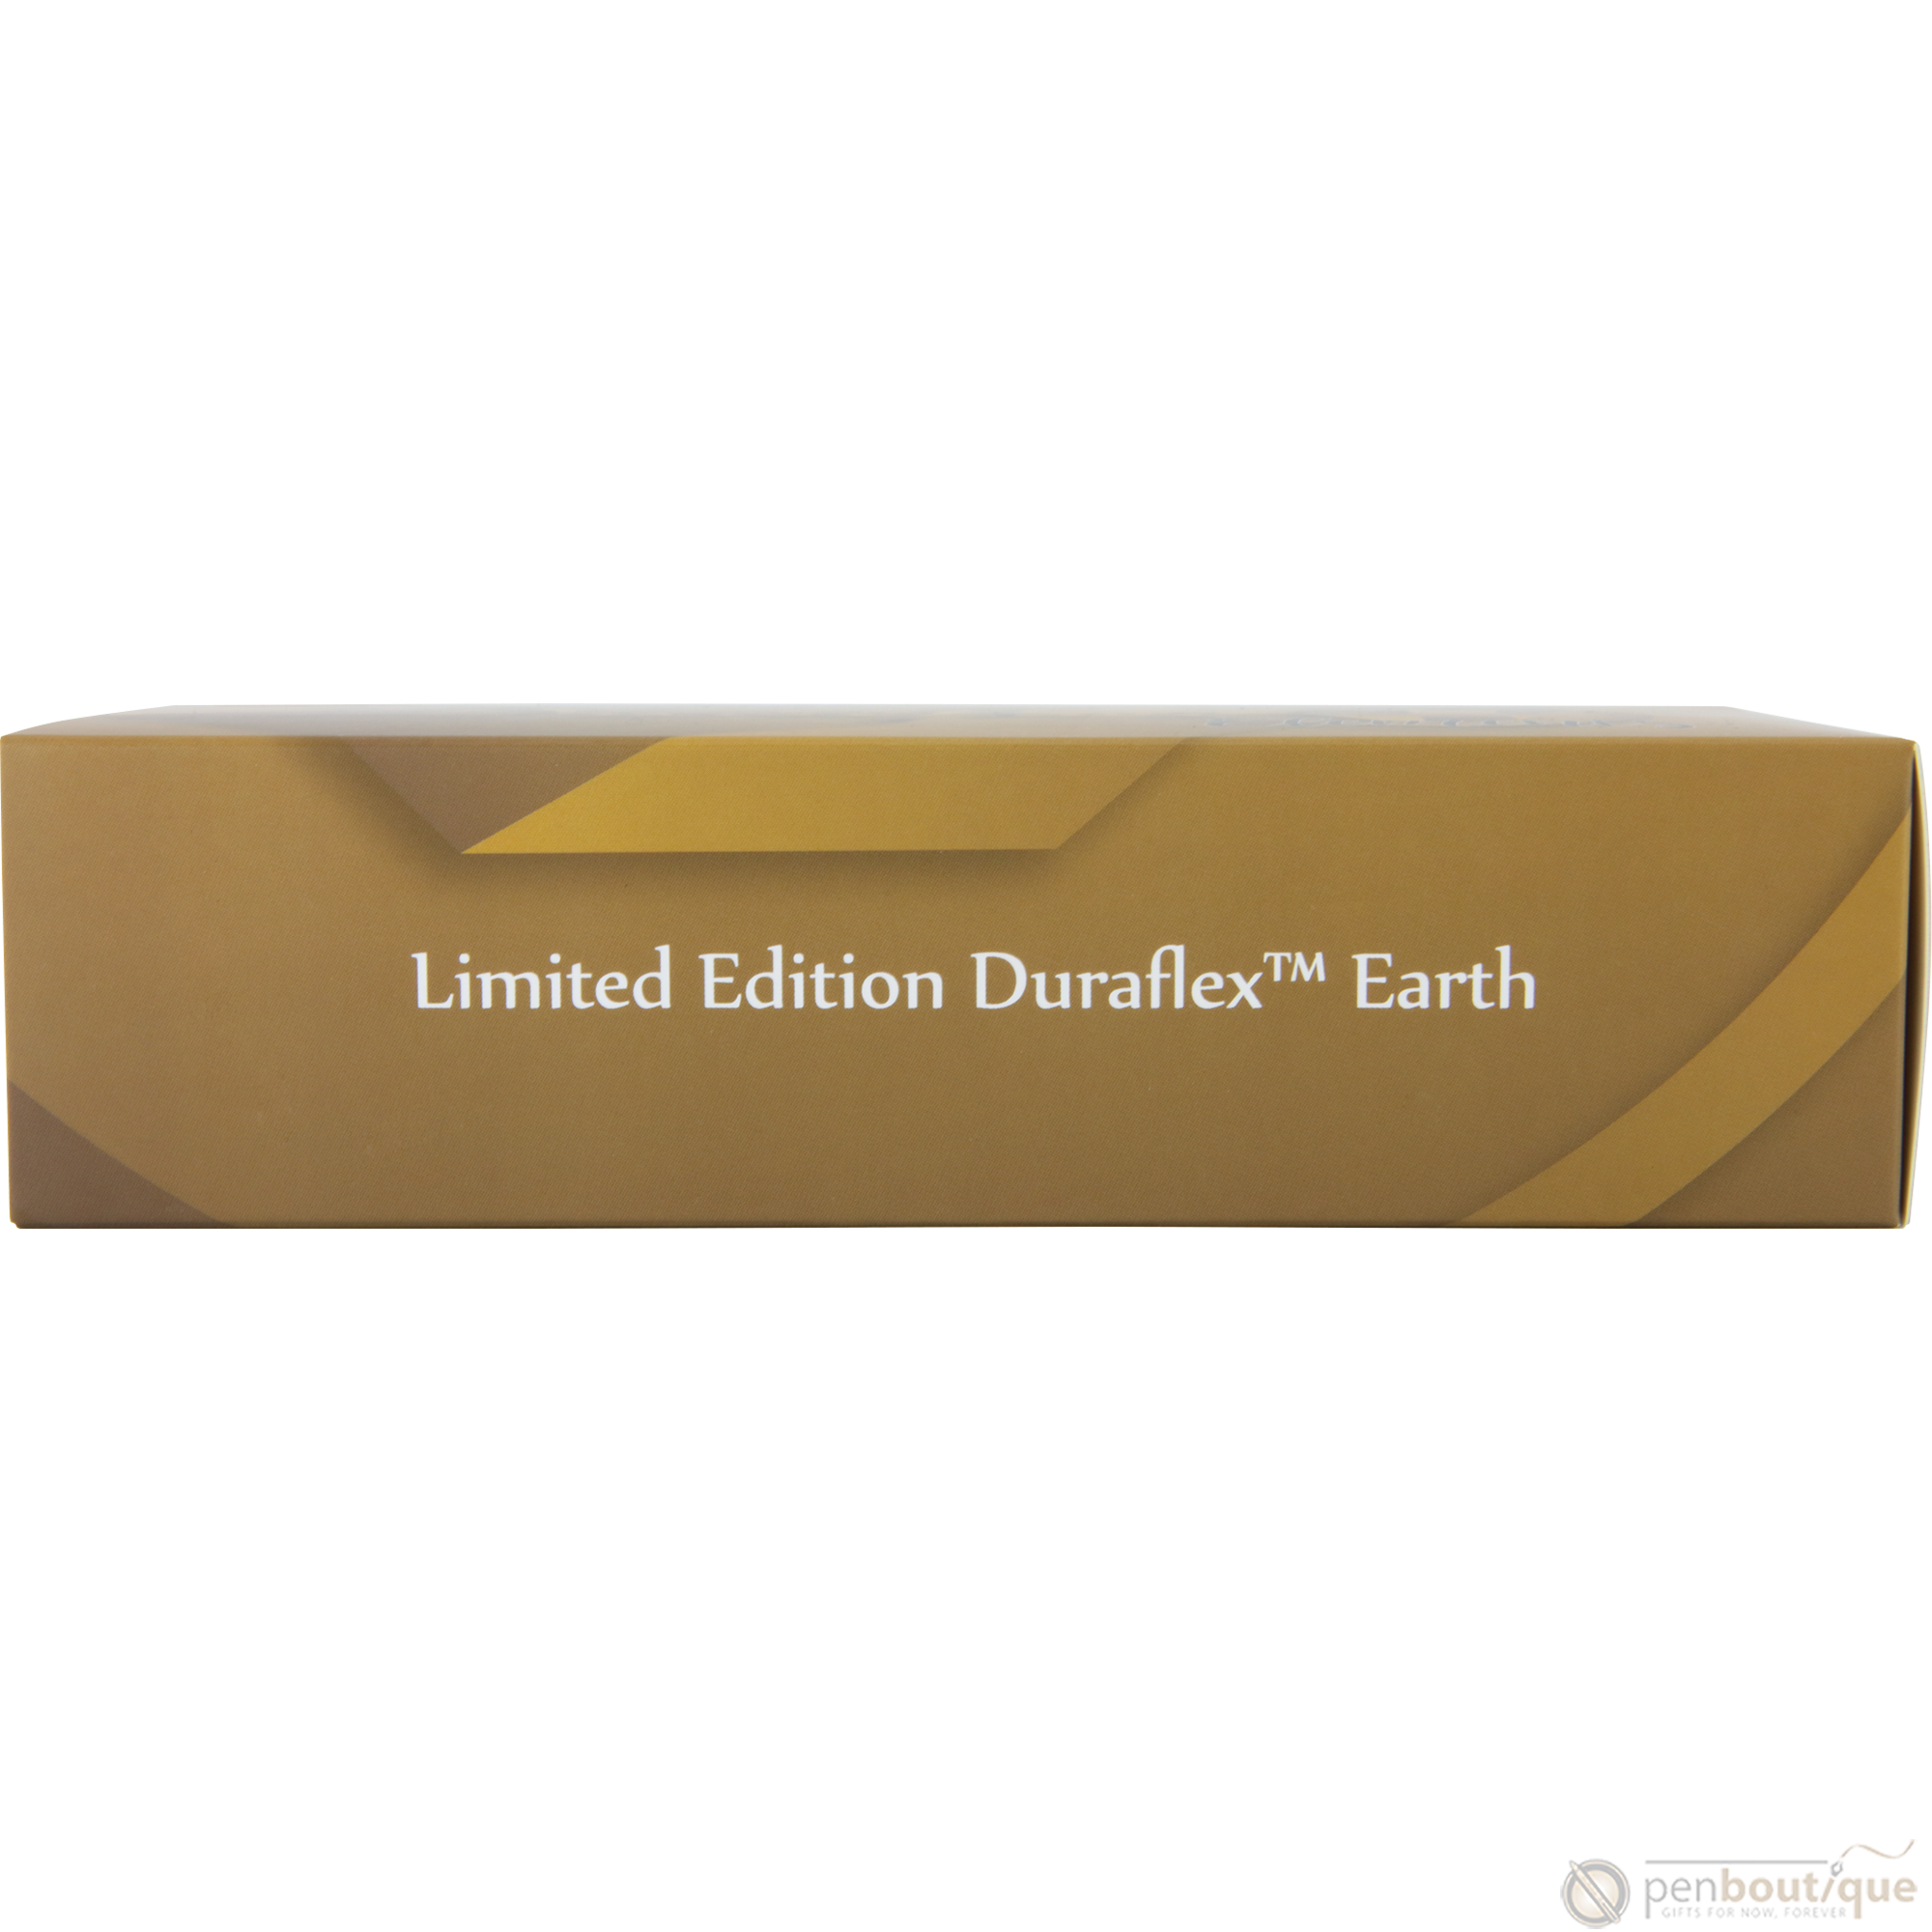 Conklin Duraflex Elements Fountain Pen - Earth (Limited Edition)-Pen Boutique Ltd